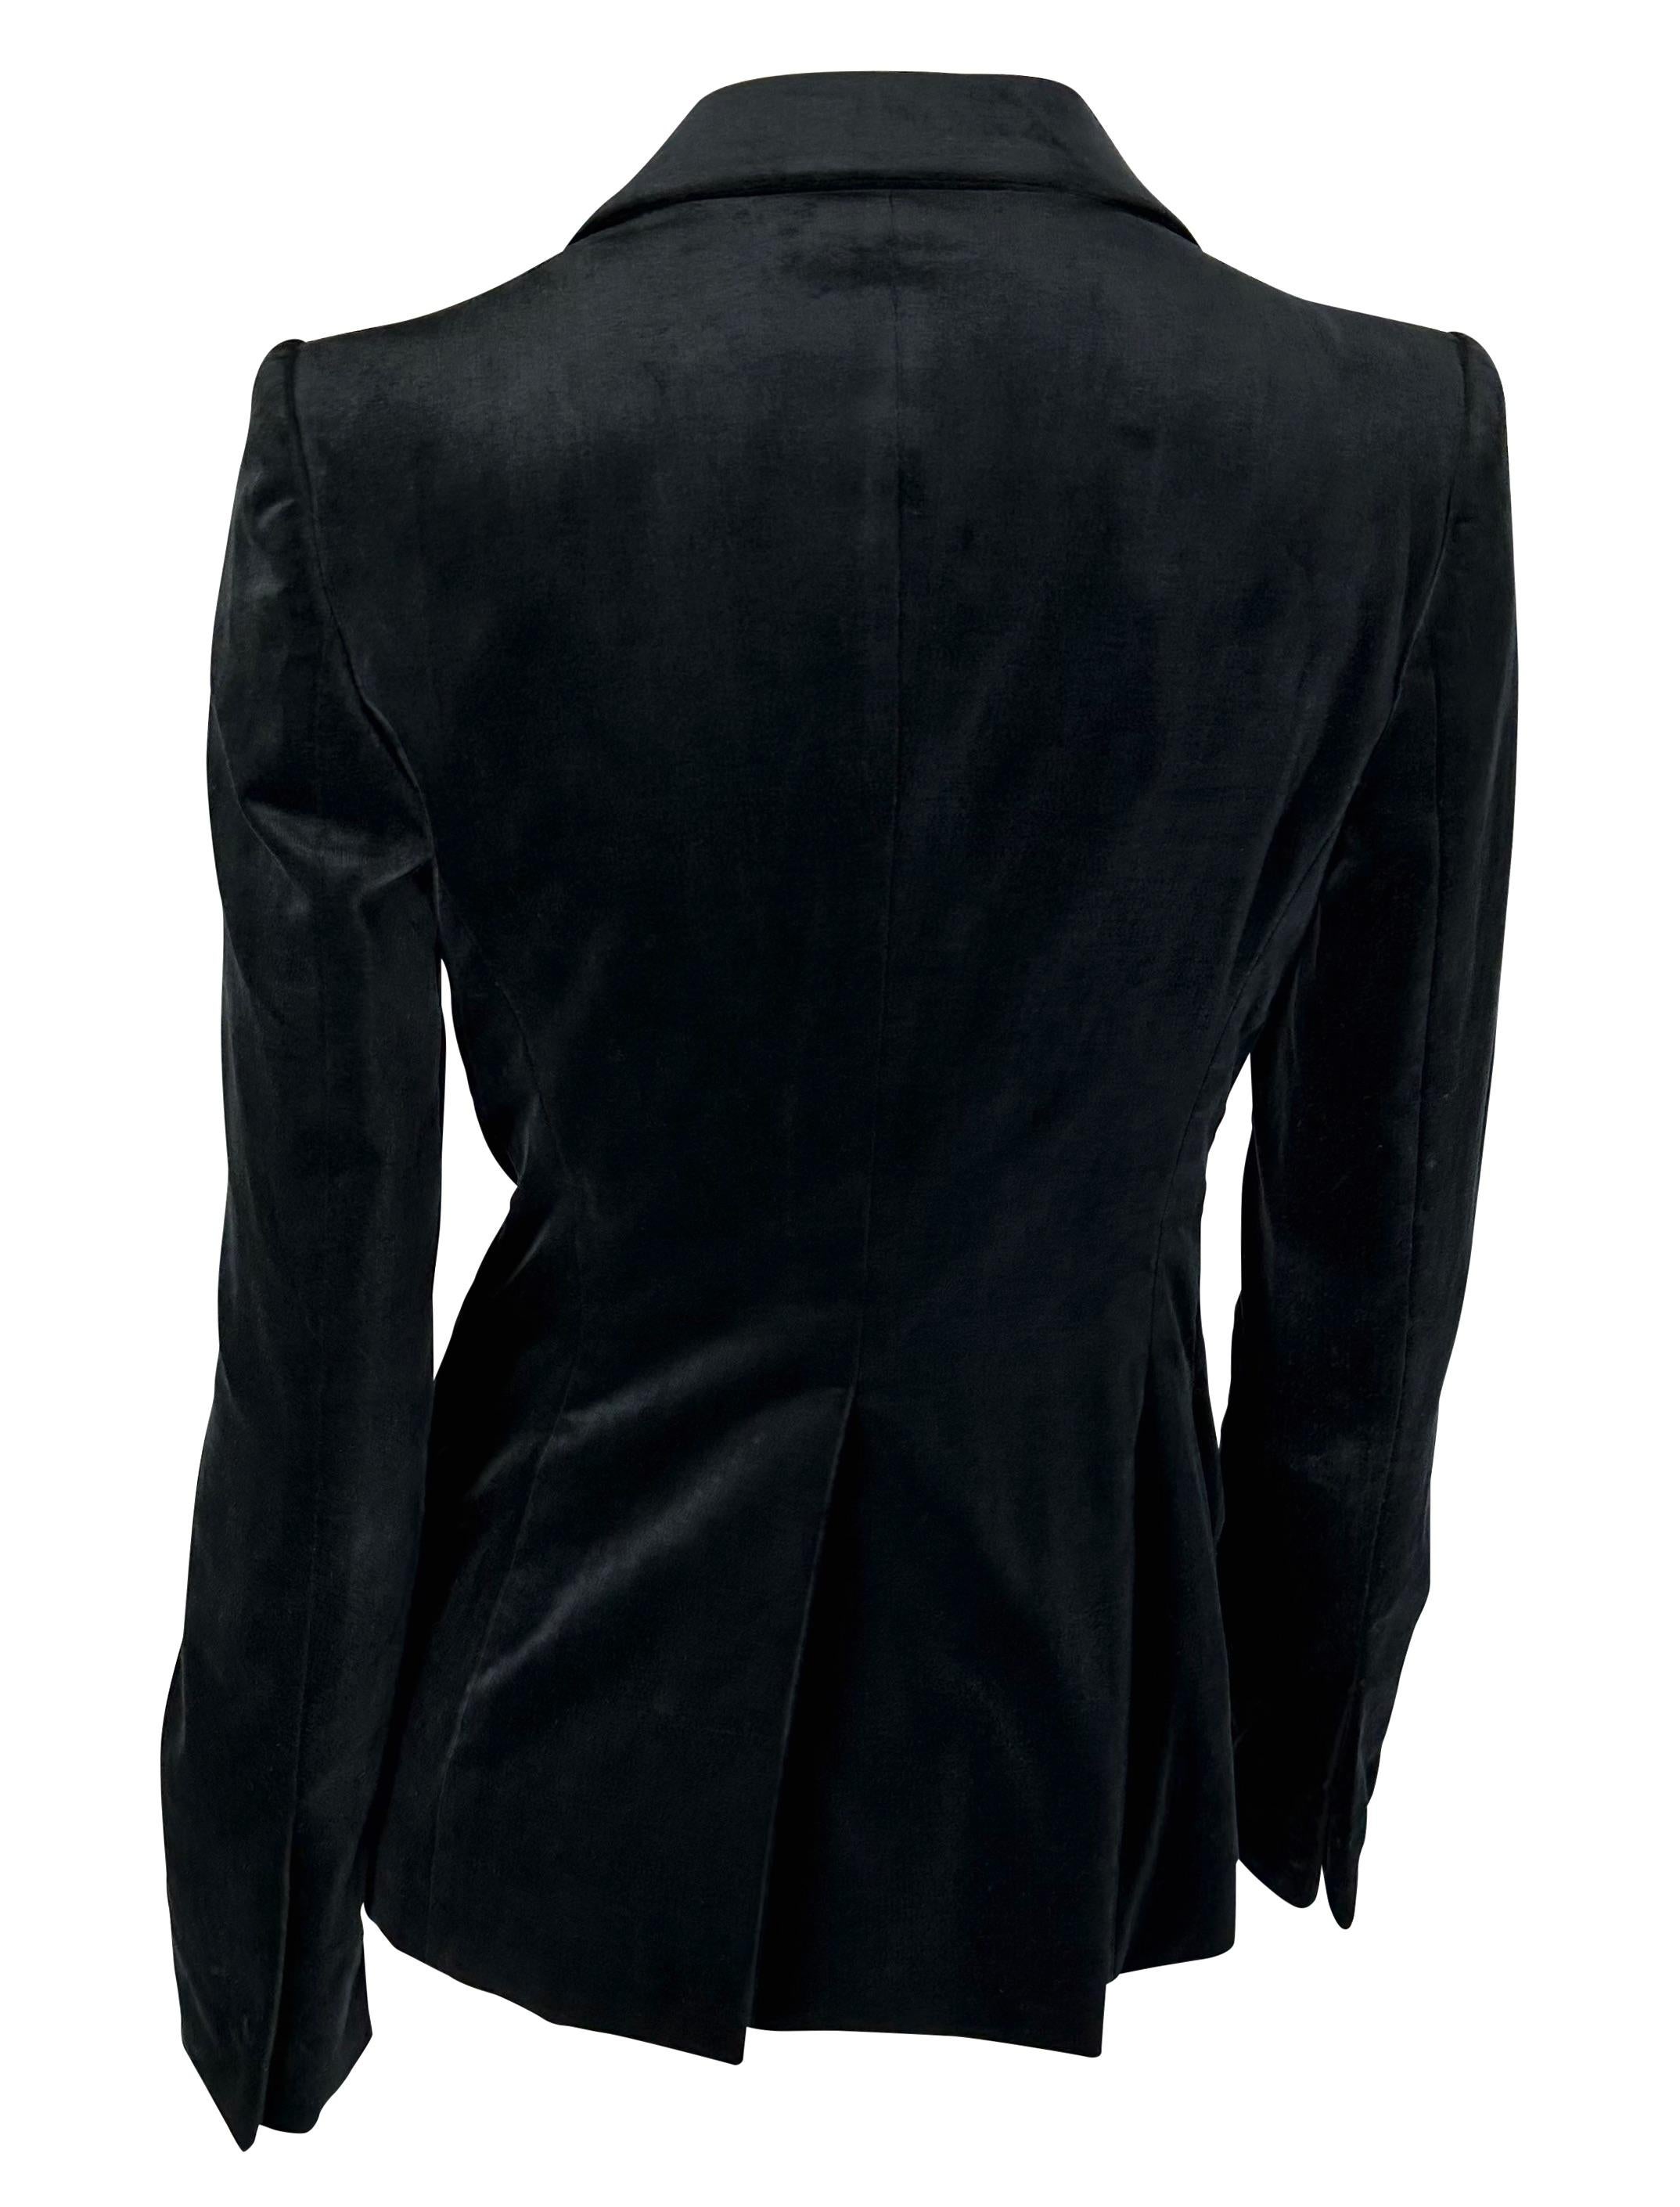 Women's F/W 2003 Gucci by Tom Ford Black Velvet Peak Lapel Blazer Jacket For Sale